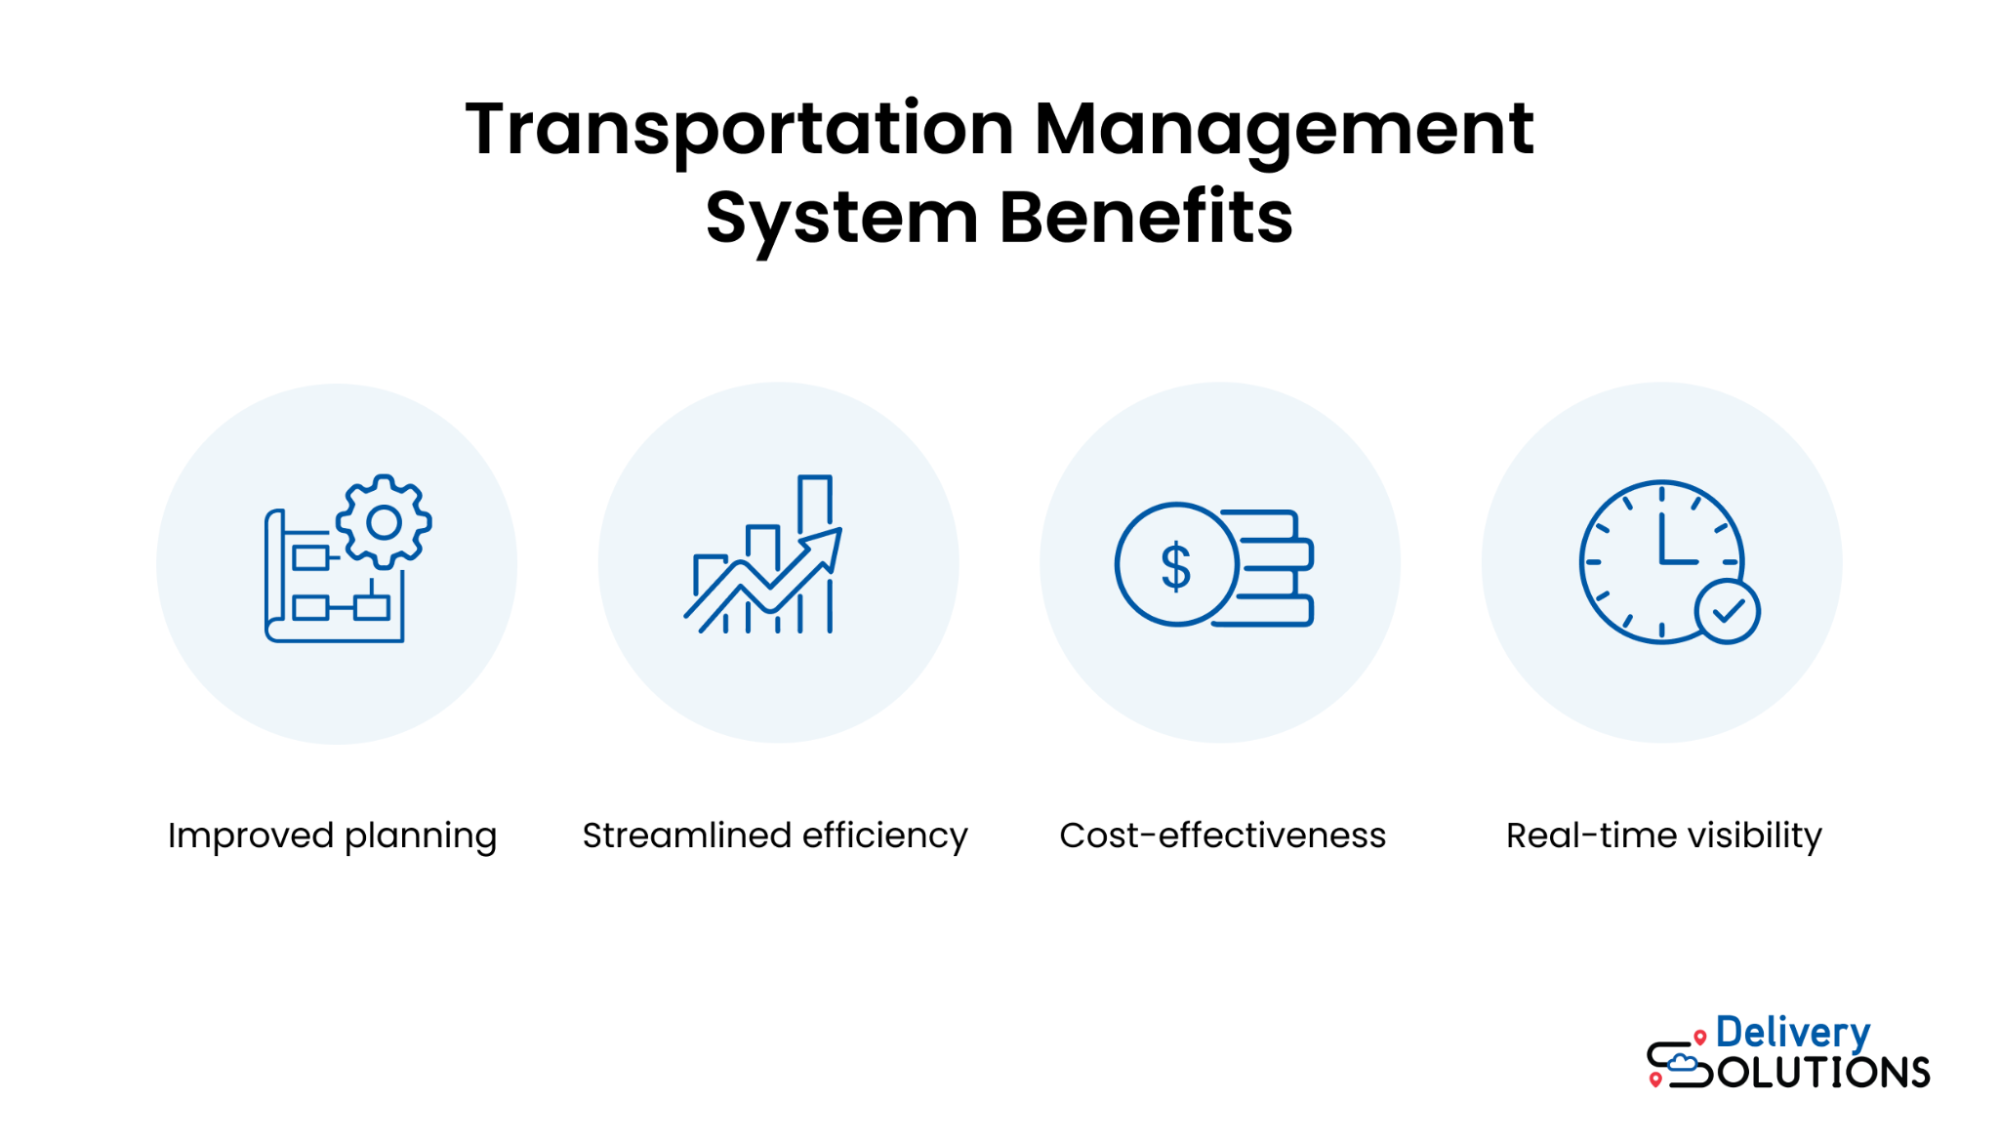 Core benefits of transportation management system